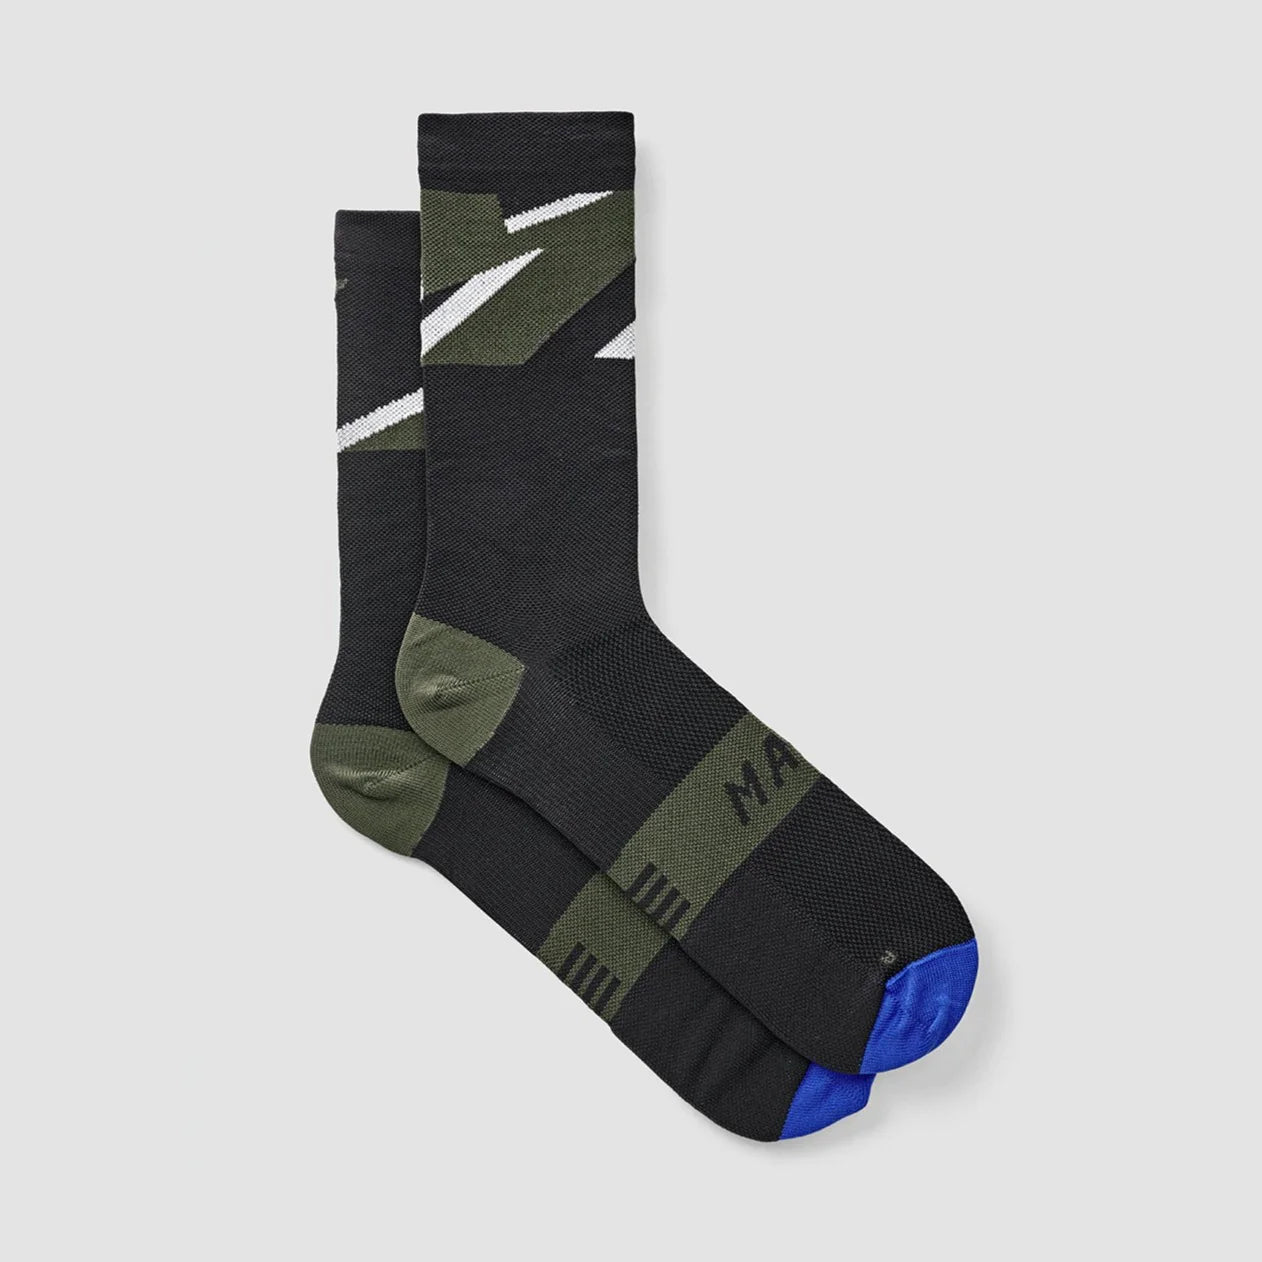 Evolce 3D Sock   Black